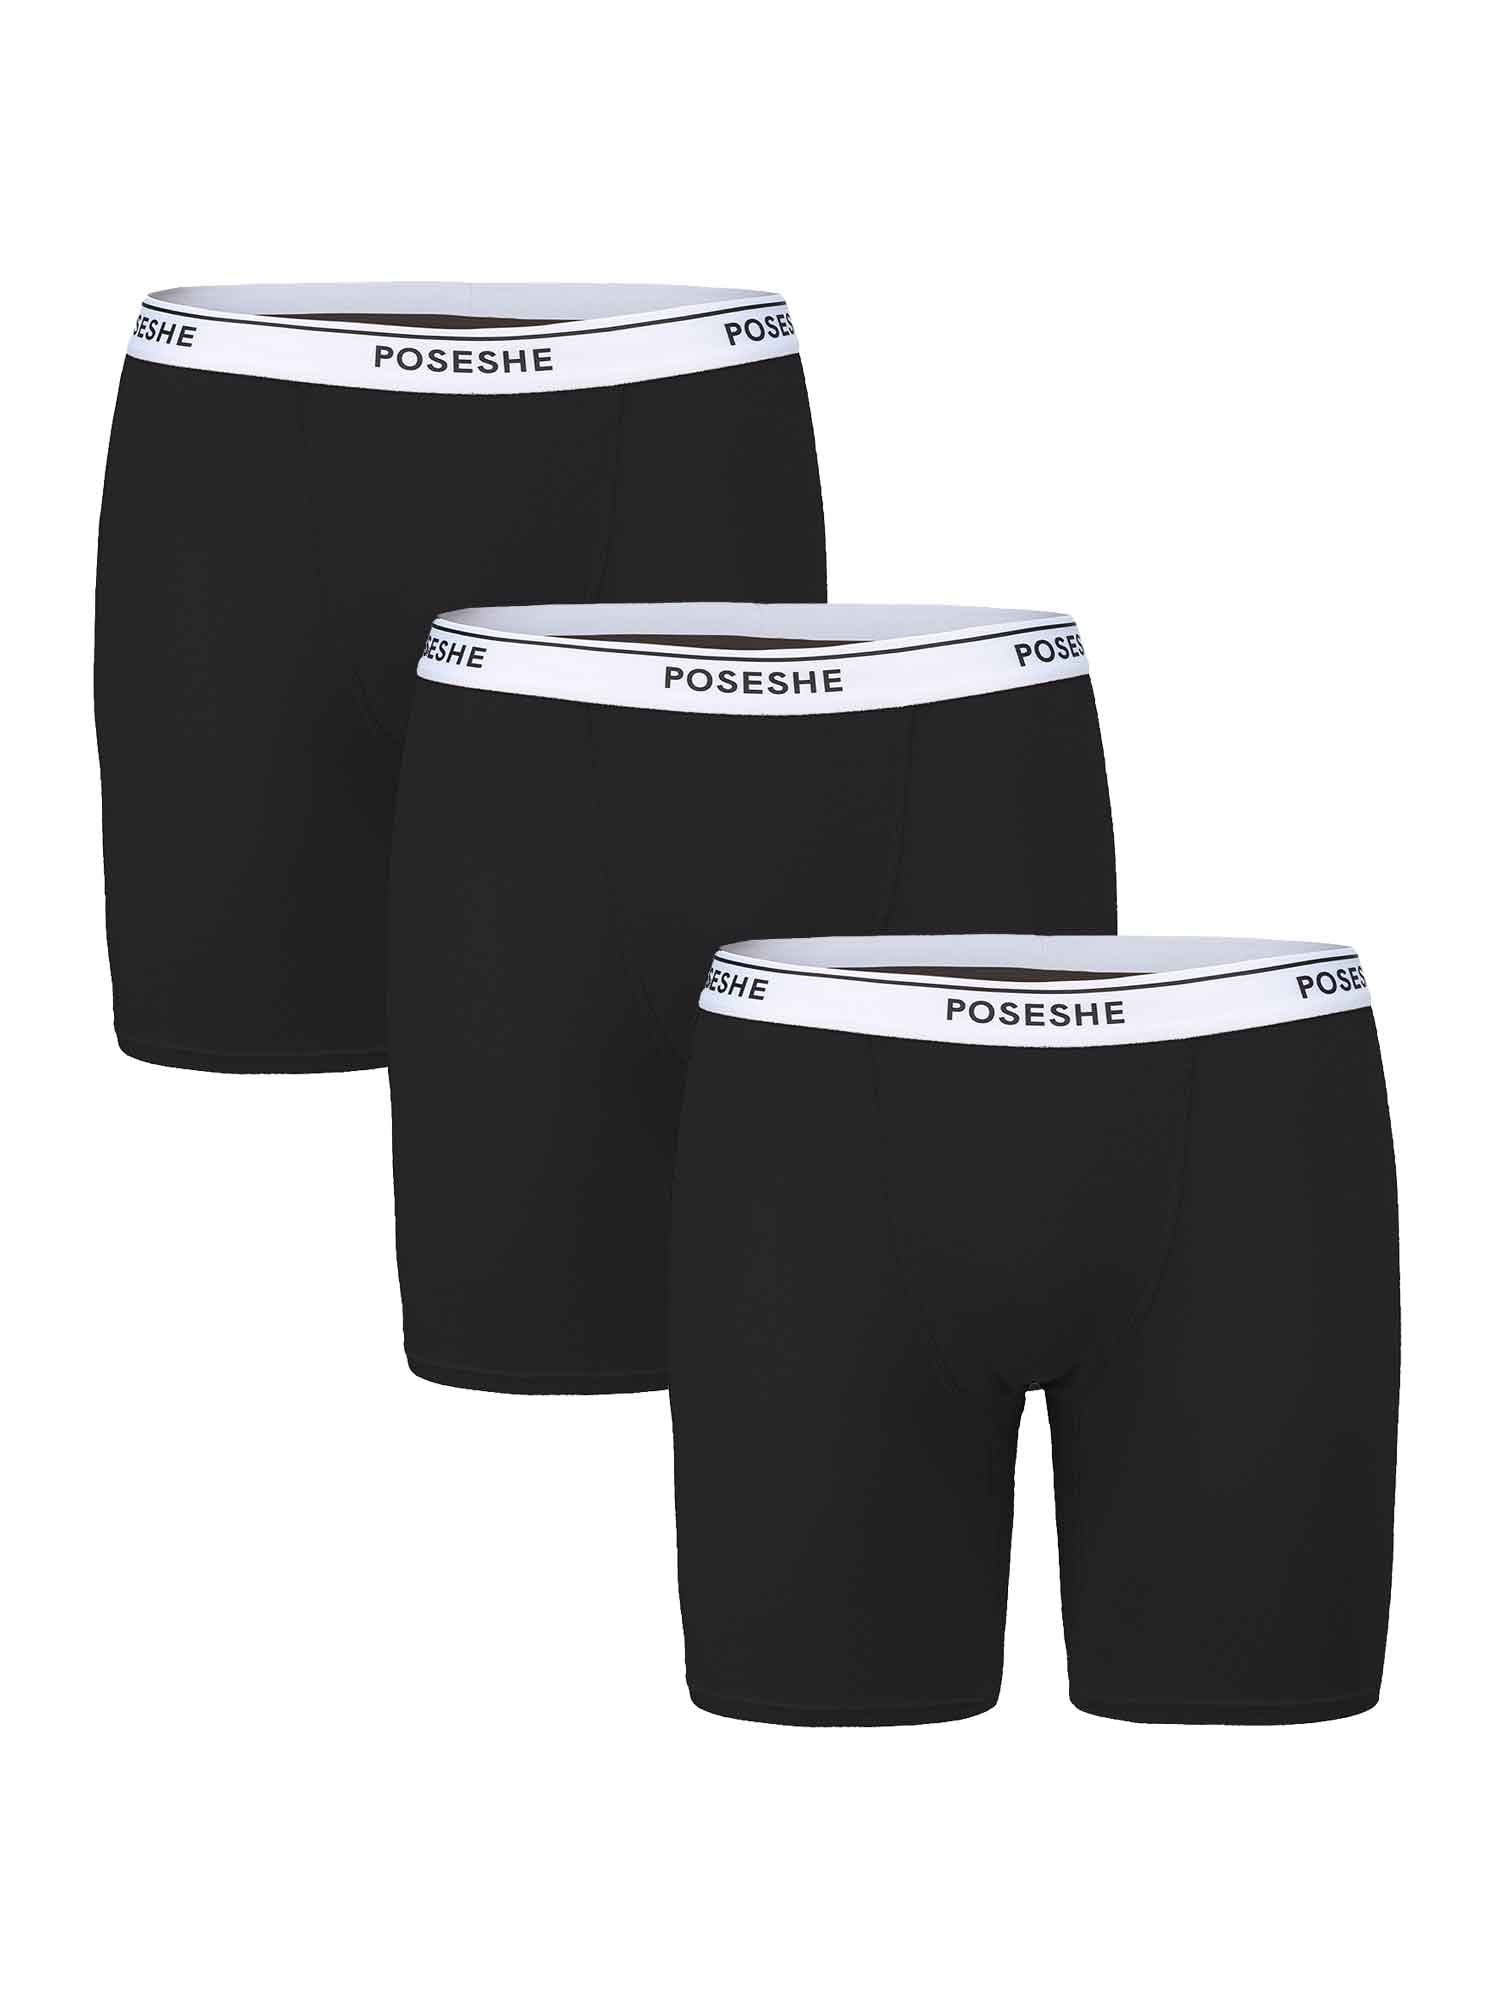 POSESHE Women's Boyshorts Panties Underwear, 6/8